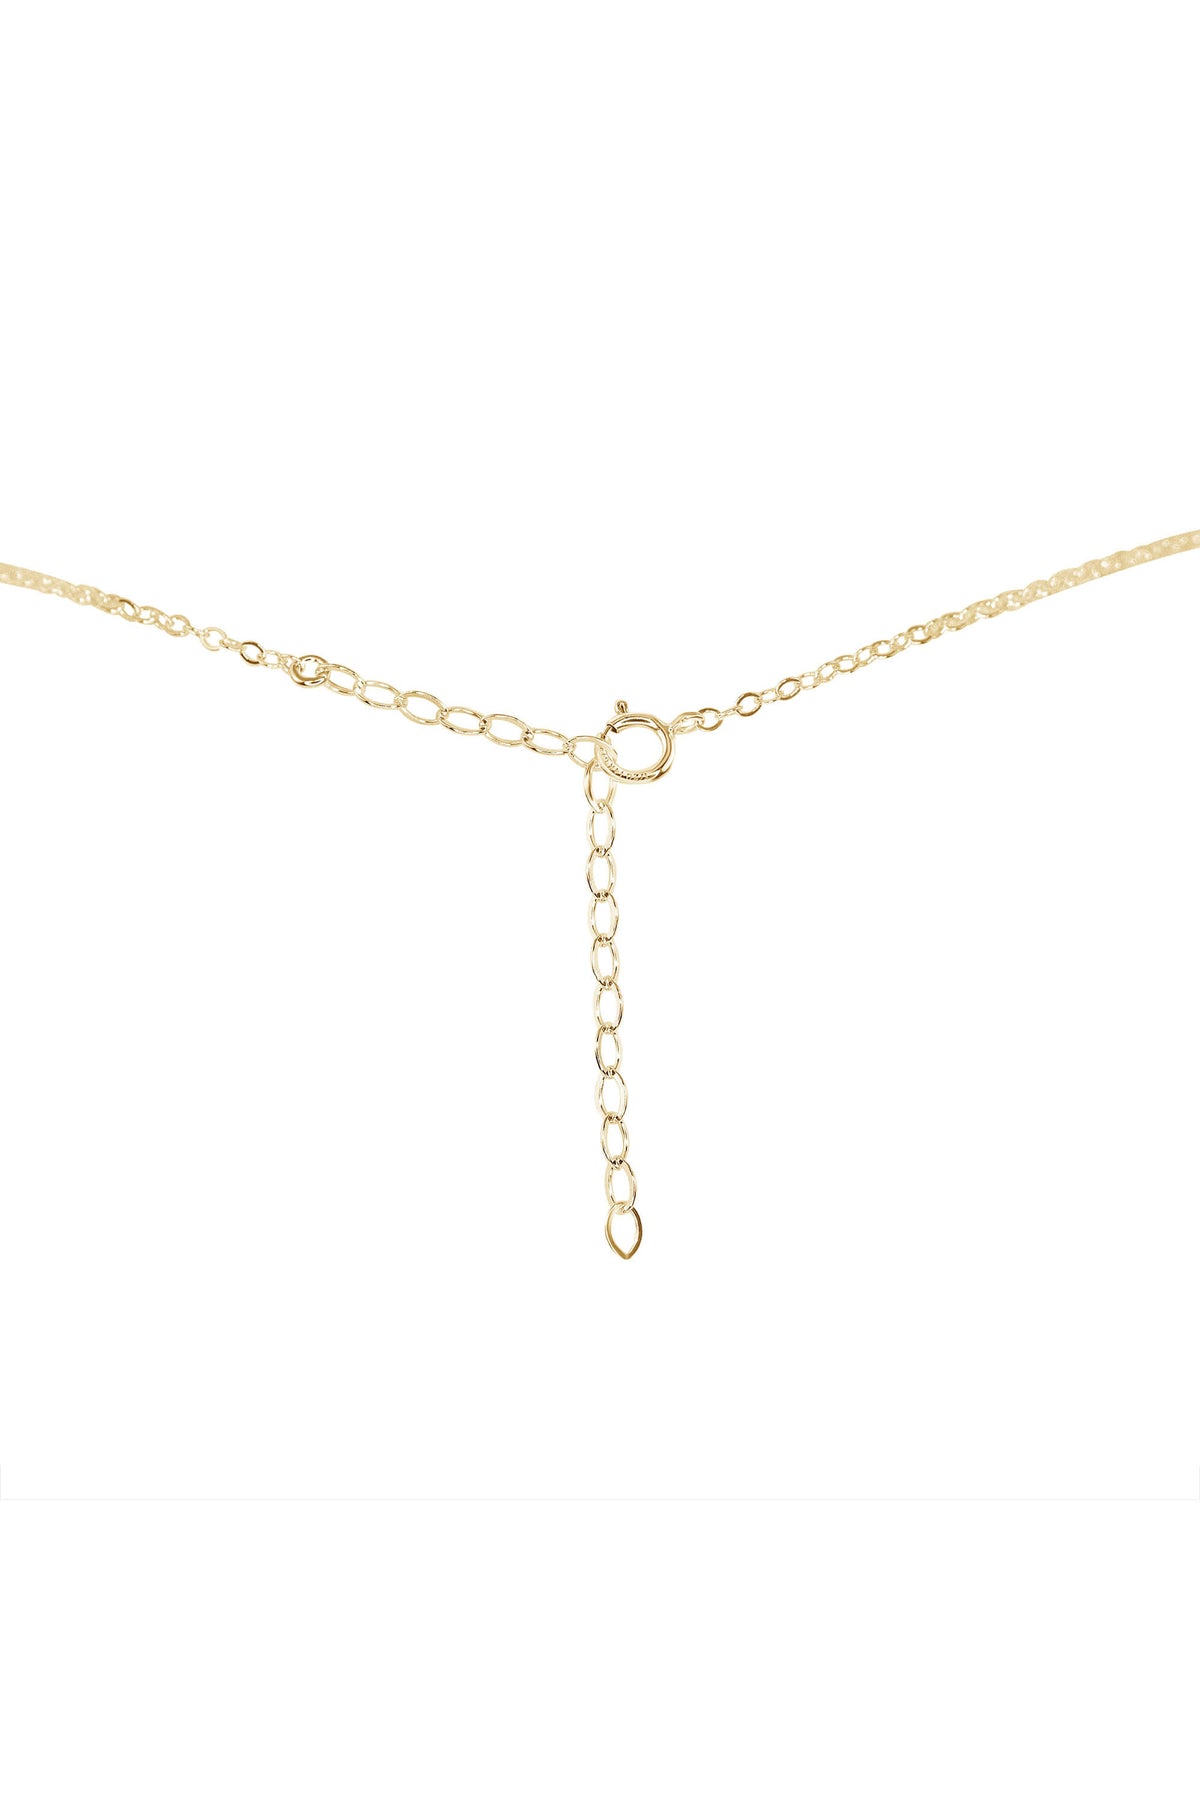 Raw Crystal Pendant Choker - Rainbow Moonstone - 14K Gold Fill - Luna Tide Handmade Jewellery